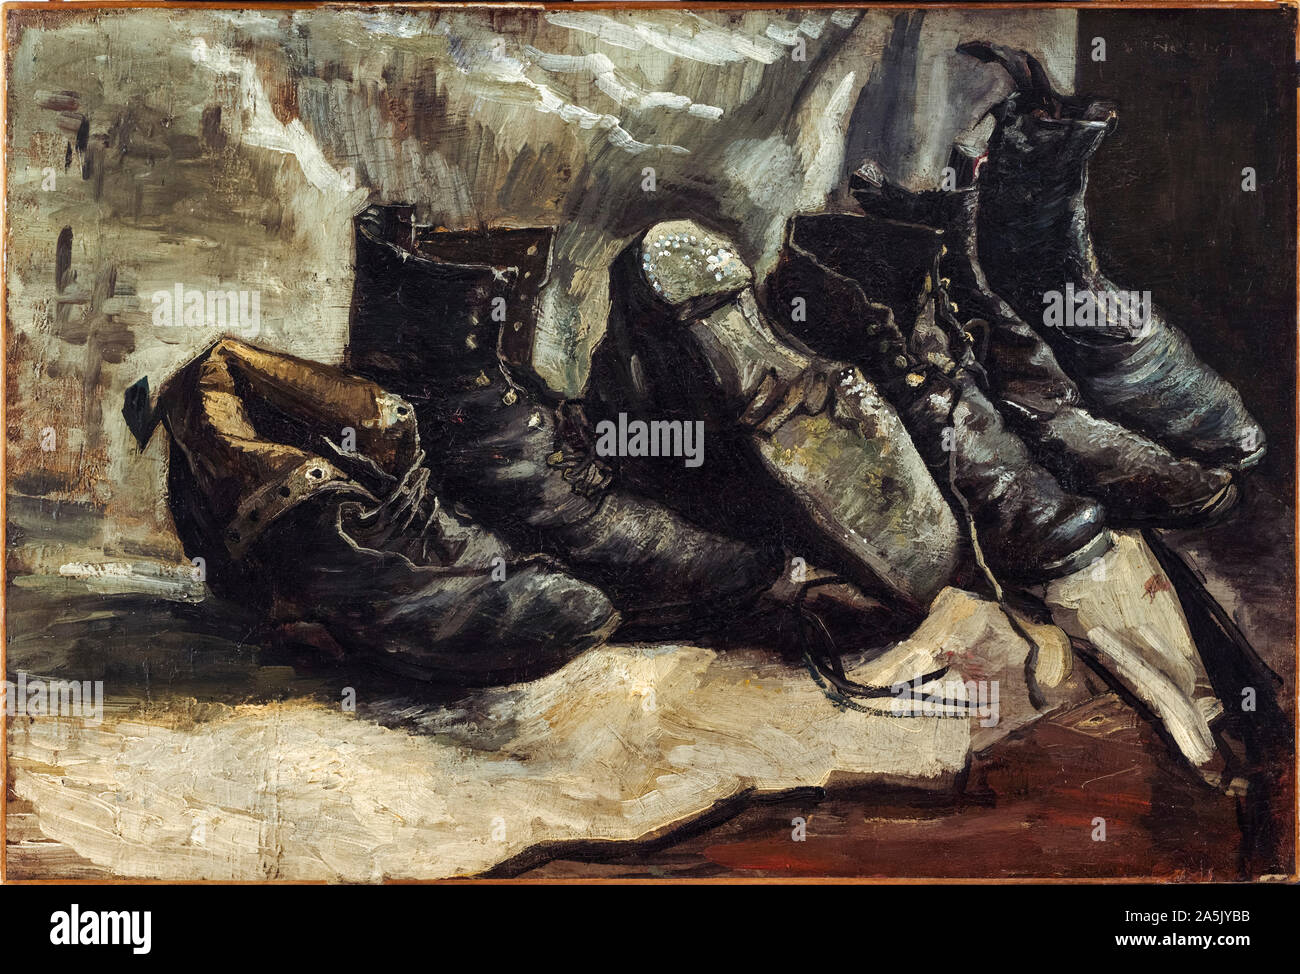 Vincent van Gogh, tres pares de zapatos, bodegón pintura, 1886 Foto de stock